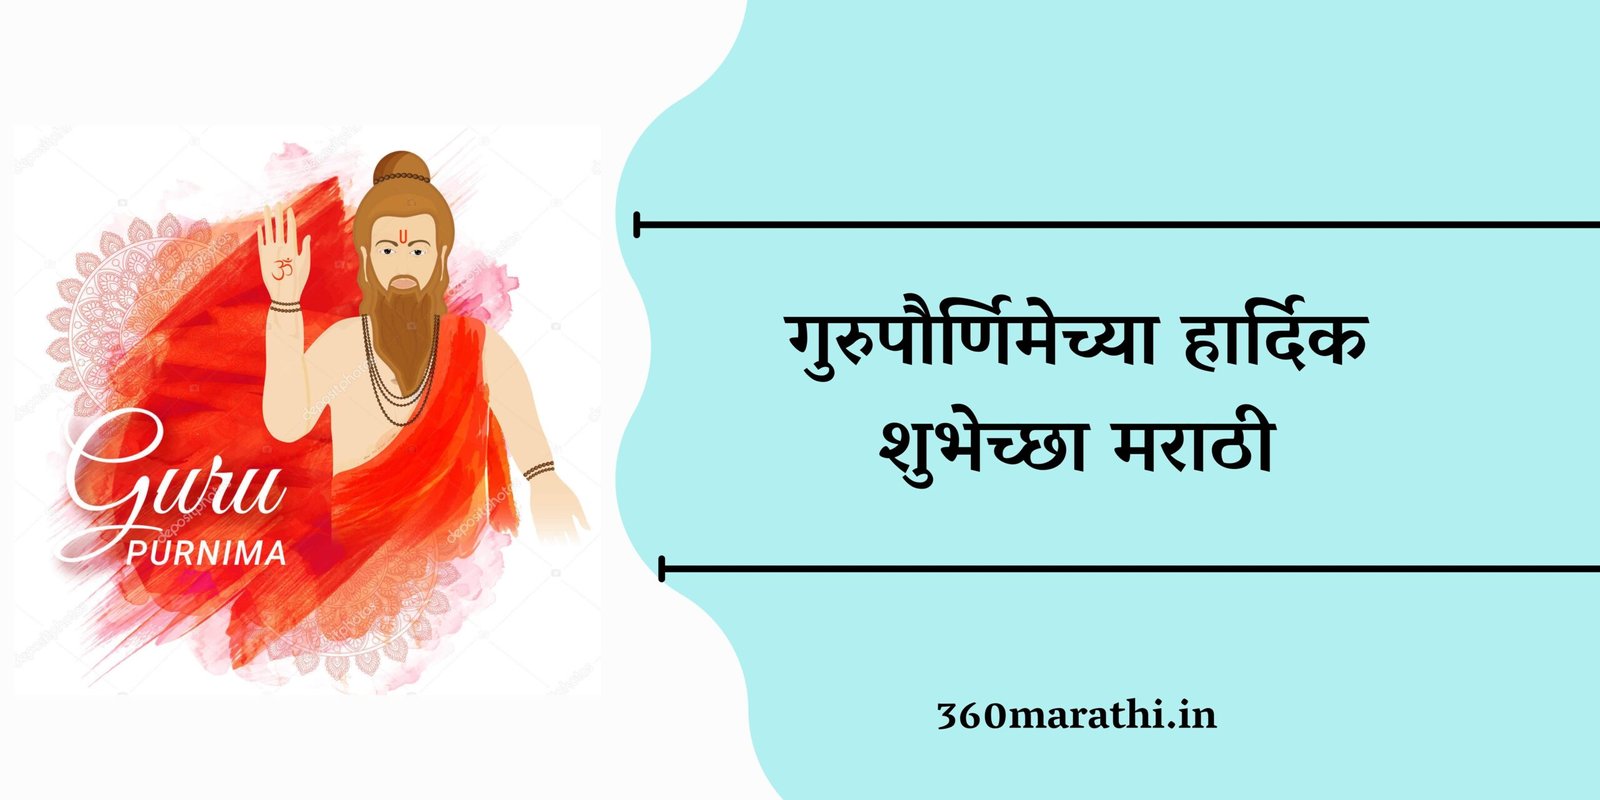 200+ गुरुपौर्णिमेच्या हार्दिक शुभेच्छा | Guru Purnima Quotes in Marathi | Guru Purnima Wishes Images, Messages, Greetings, Whatsapp Status Marathi